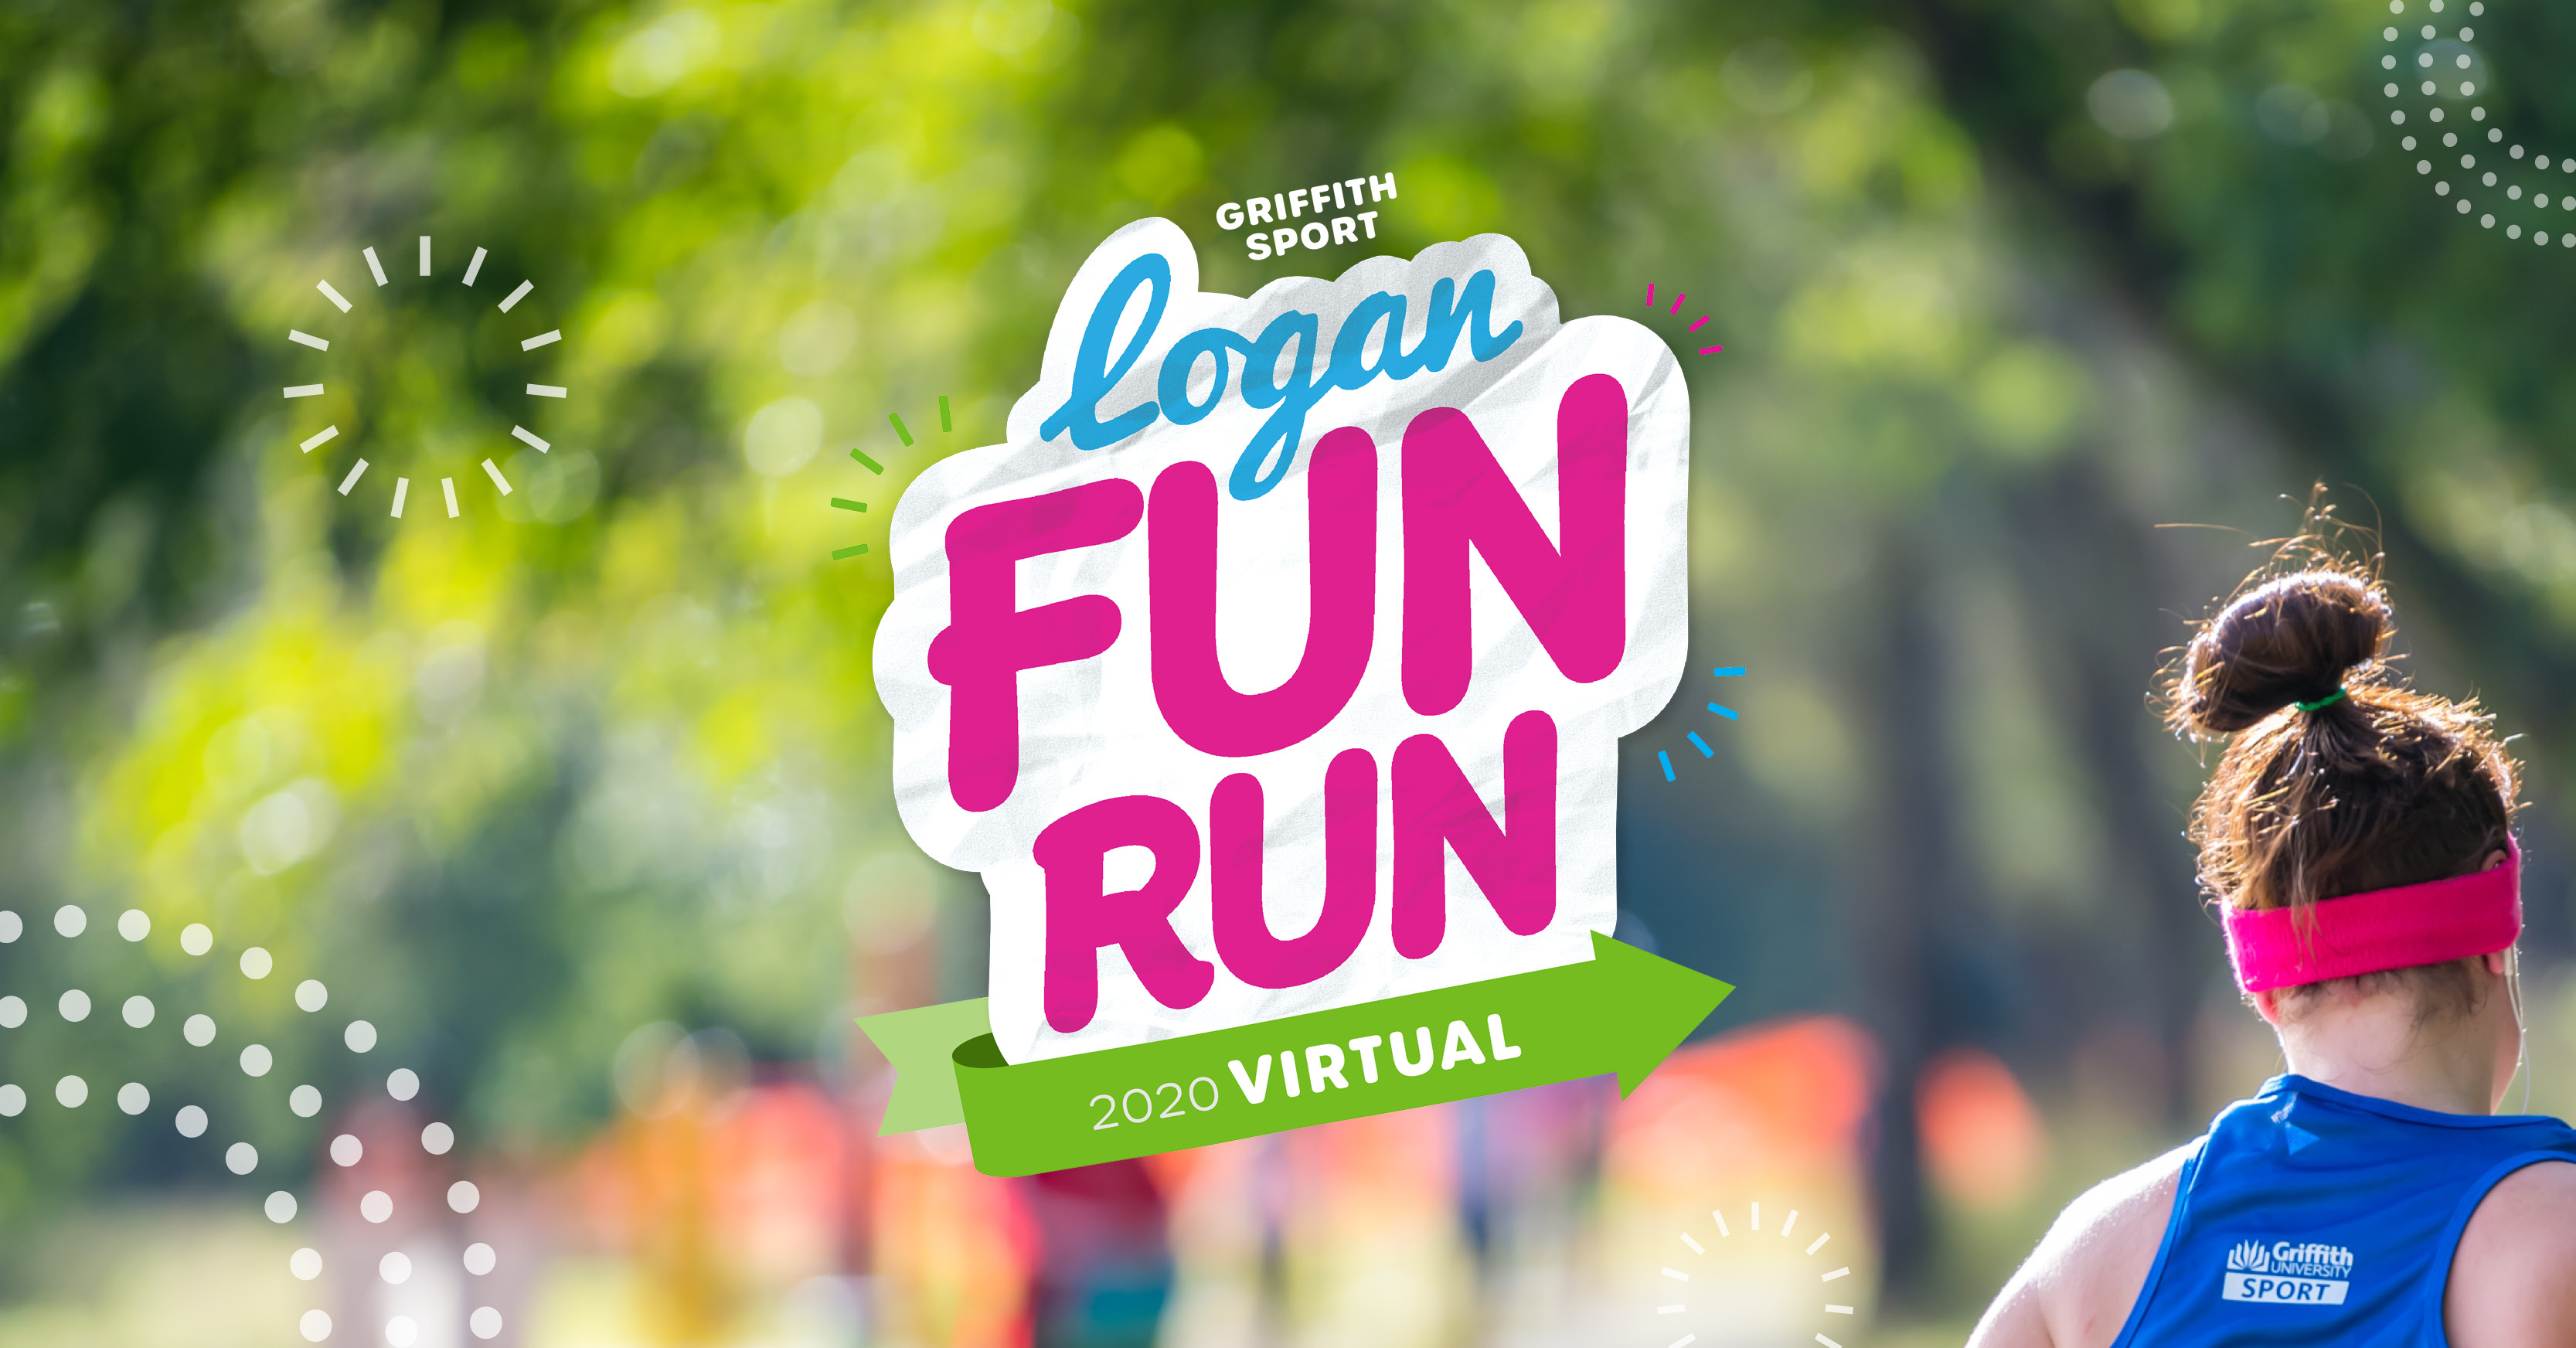 NOW ONLINE - Logan Fun Run